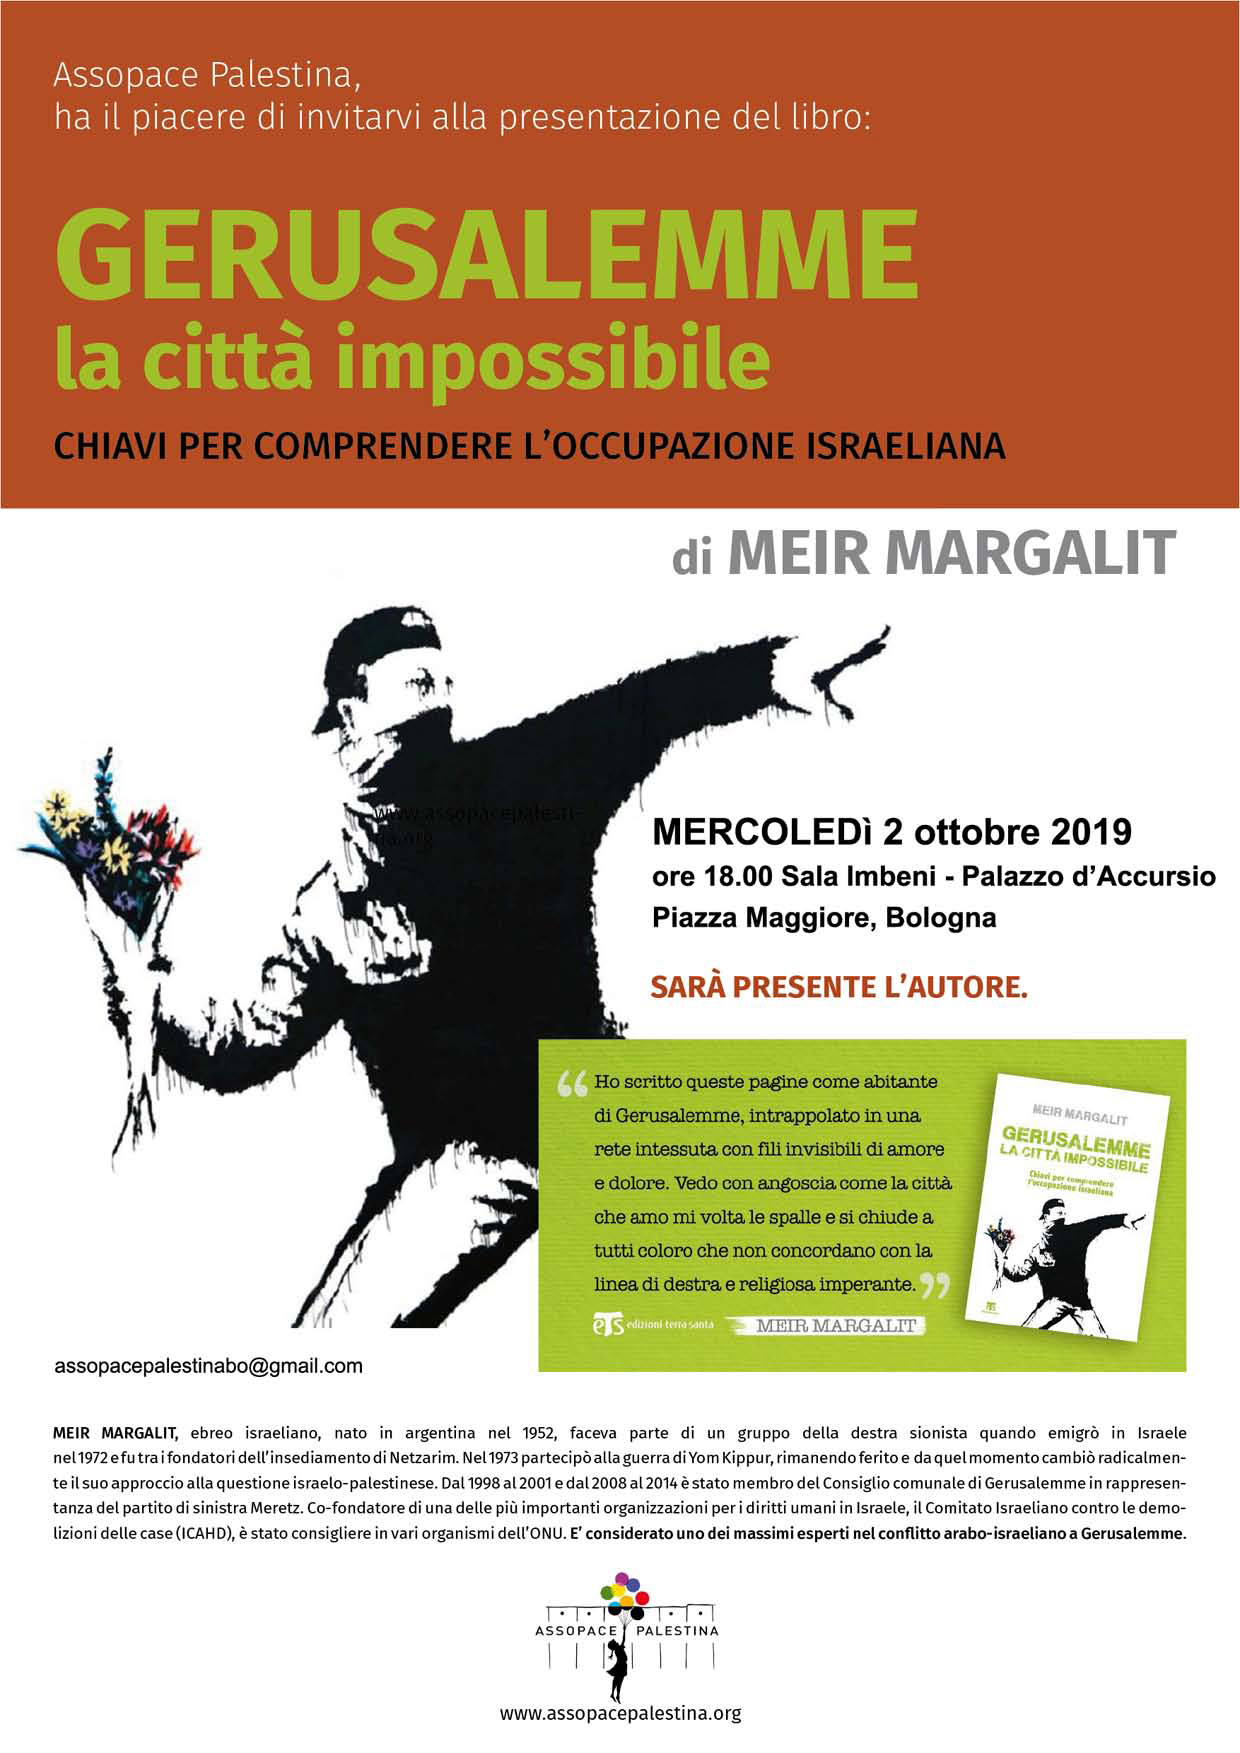 Bologna, 2 ottobre: Meir Margalit presenta il suo libro su Gerusalemme.